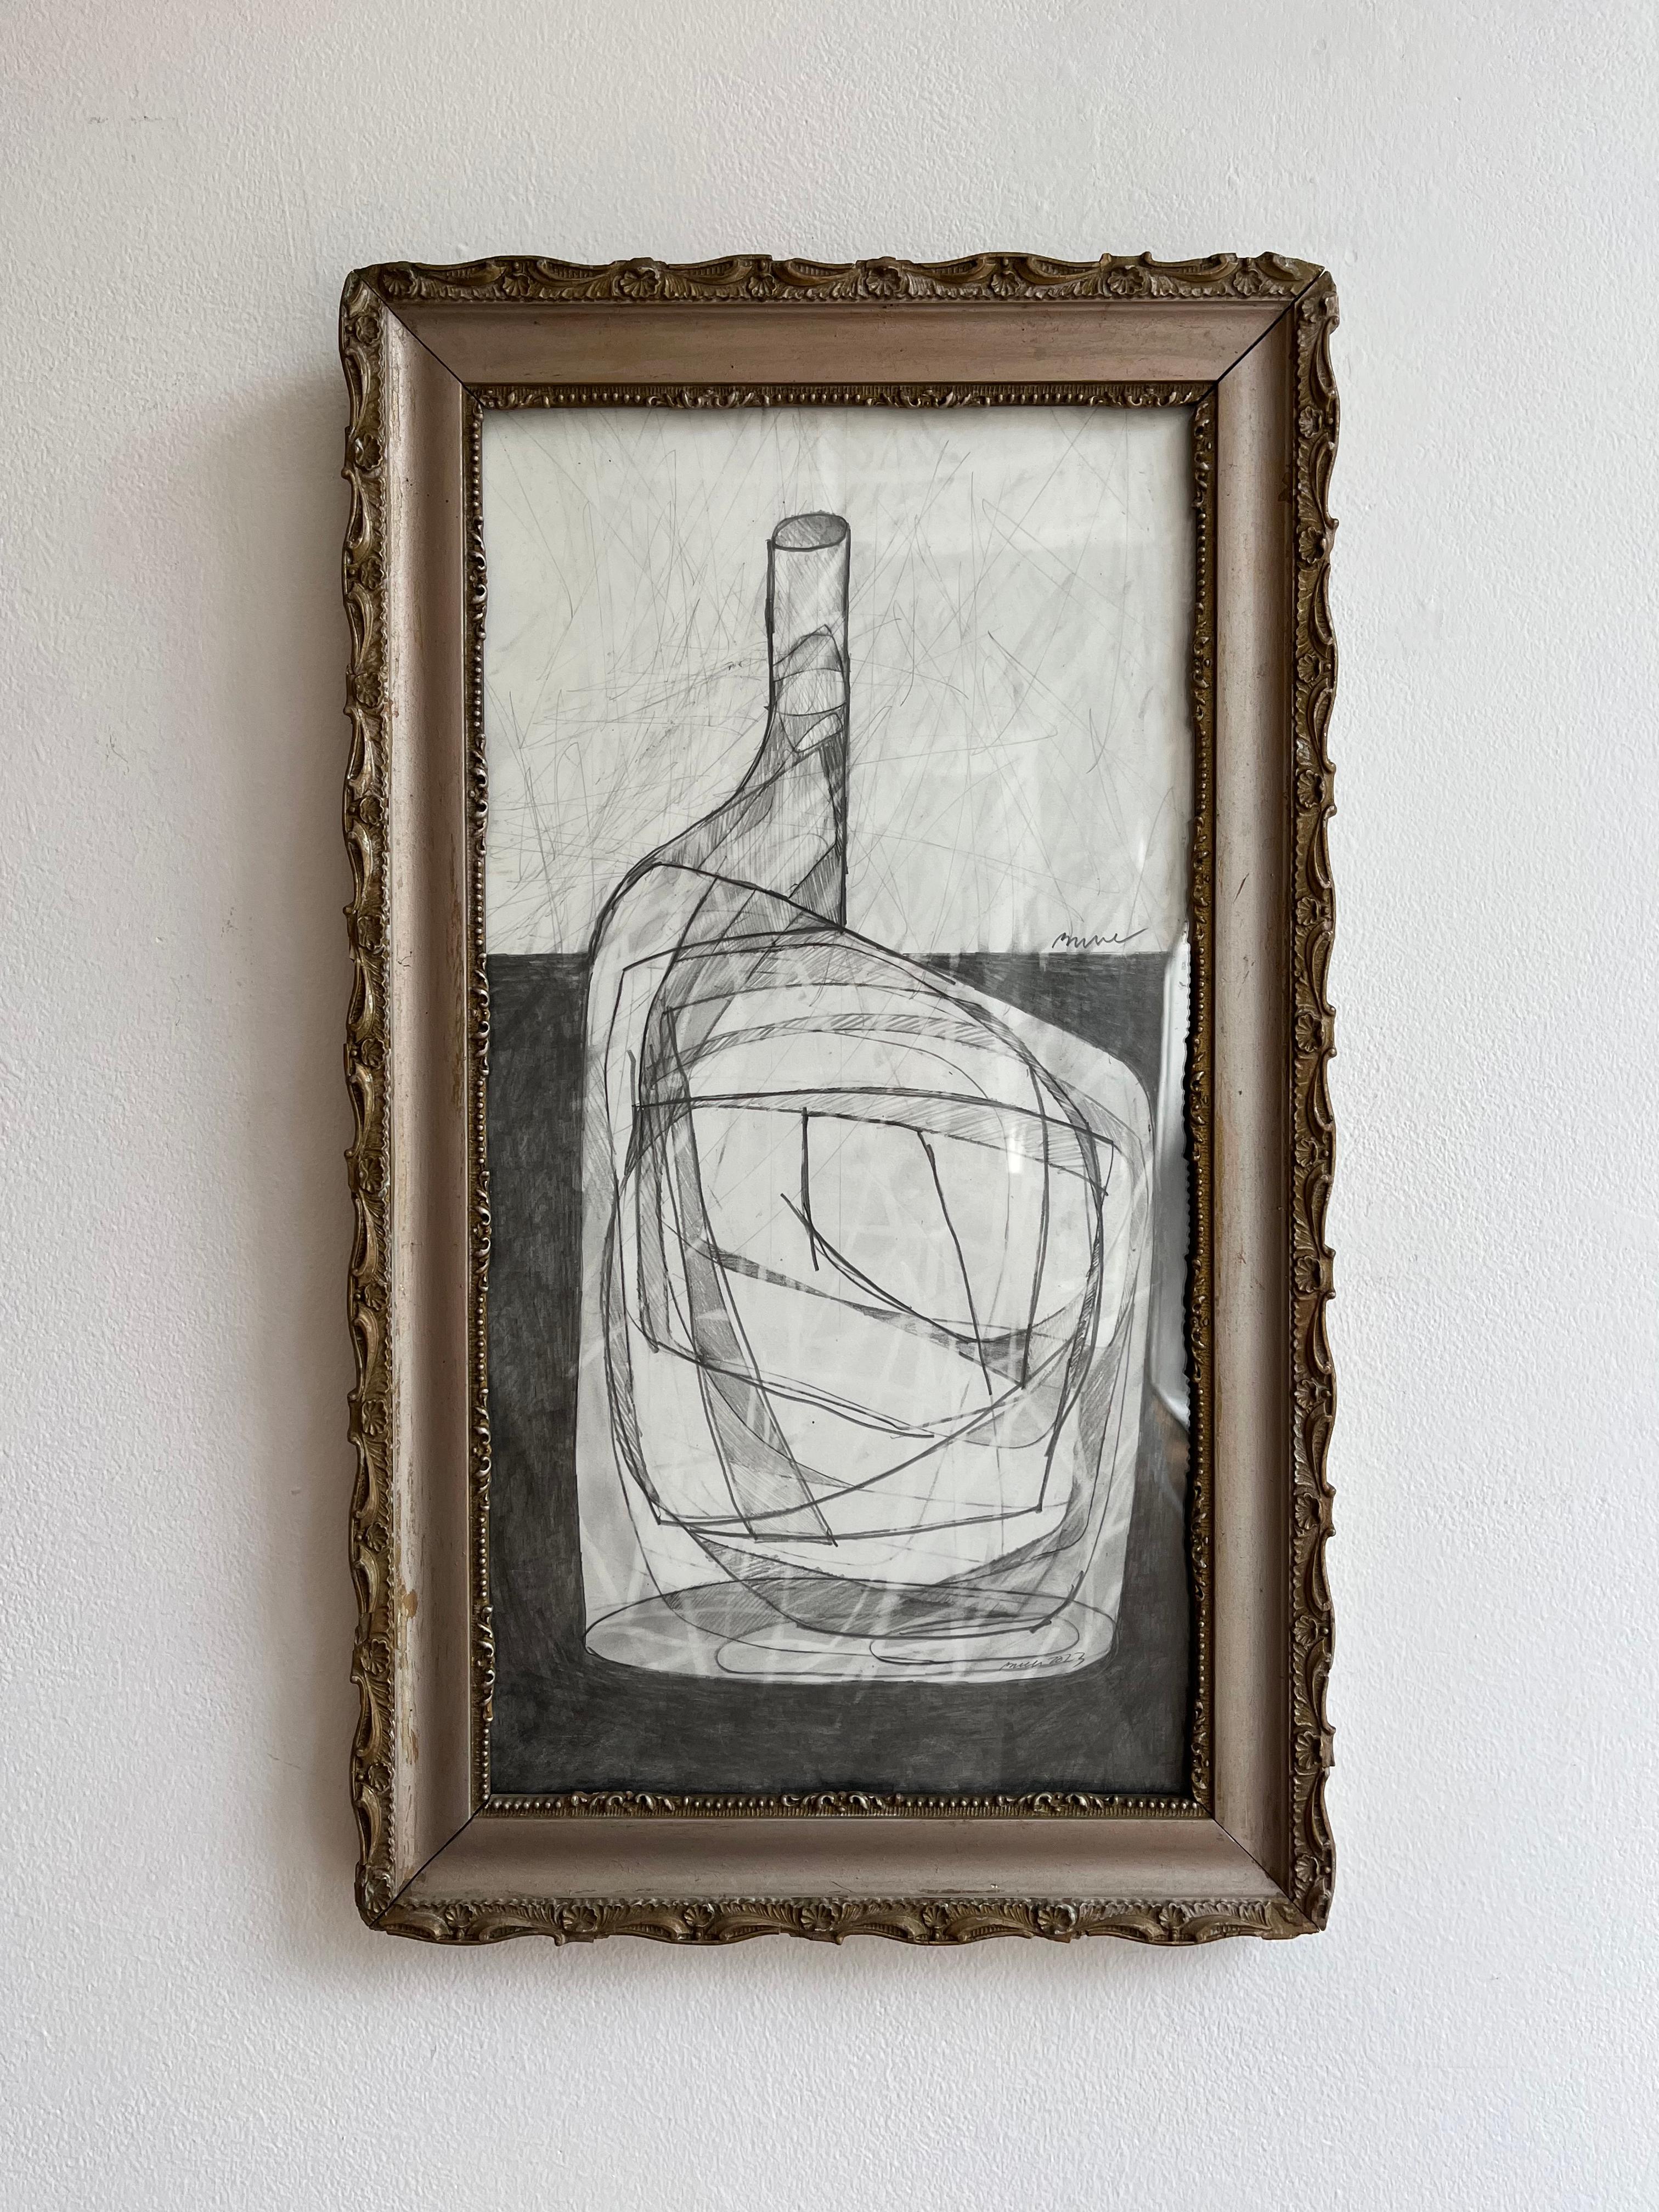 Morandi 19 (Abstract, Cubist Still Life Drawing Inspired by Morandi Bottle)  - Art by David Dew Bruner